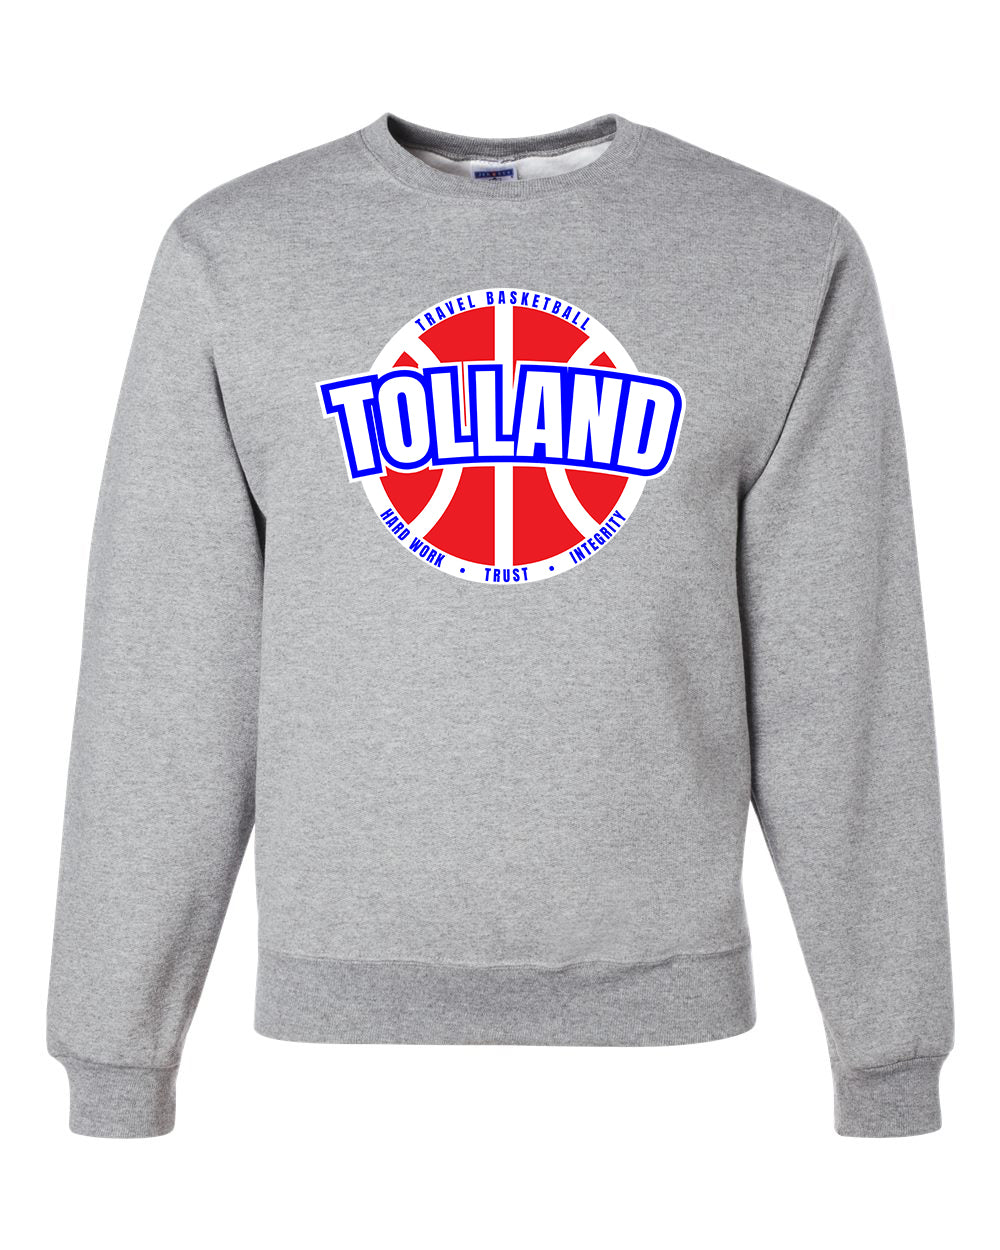 Tolland TB Adult Crewneck Sweatshirt - 562MR (color options available)